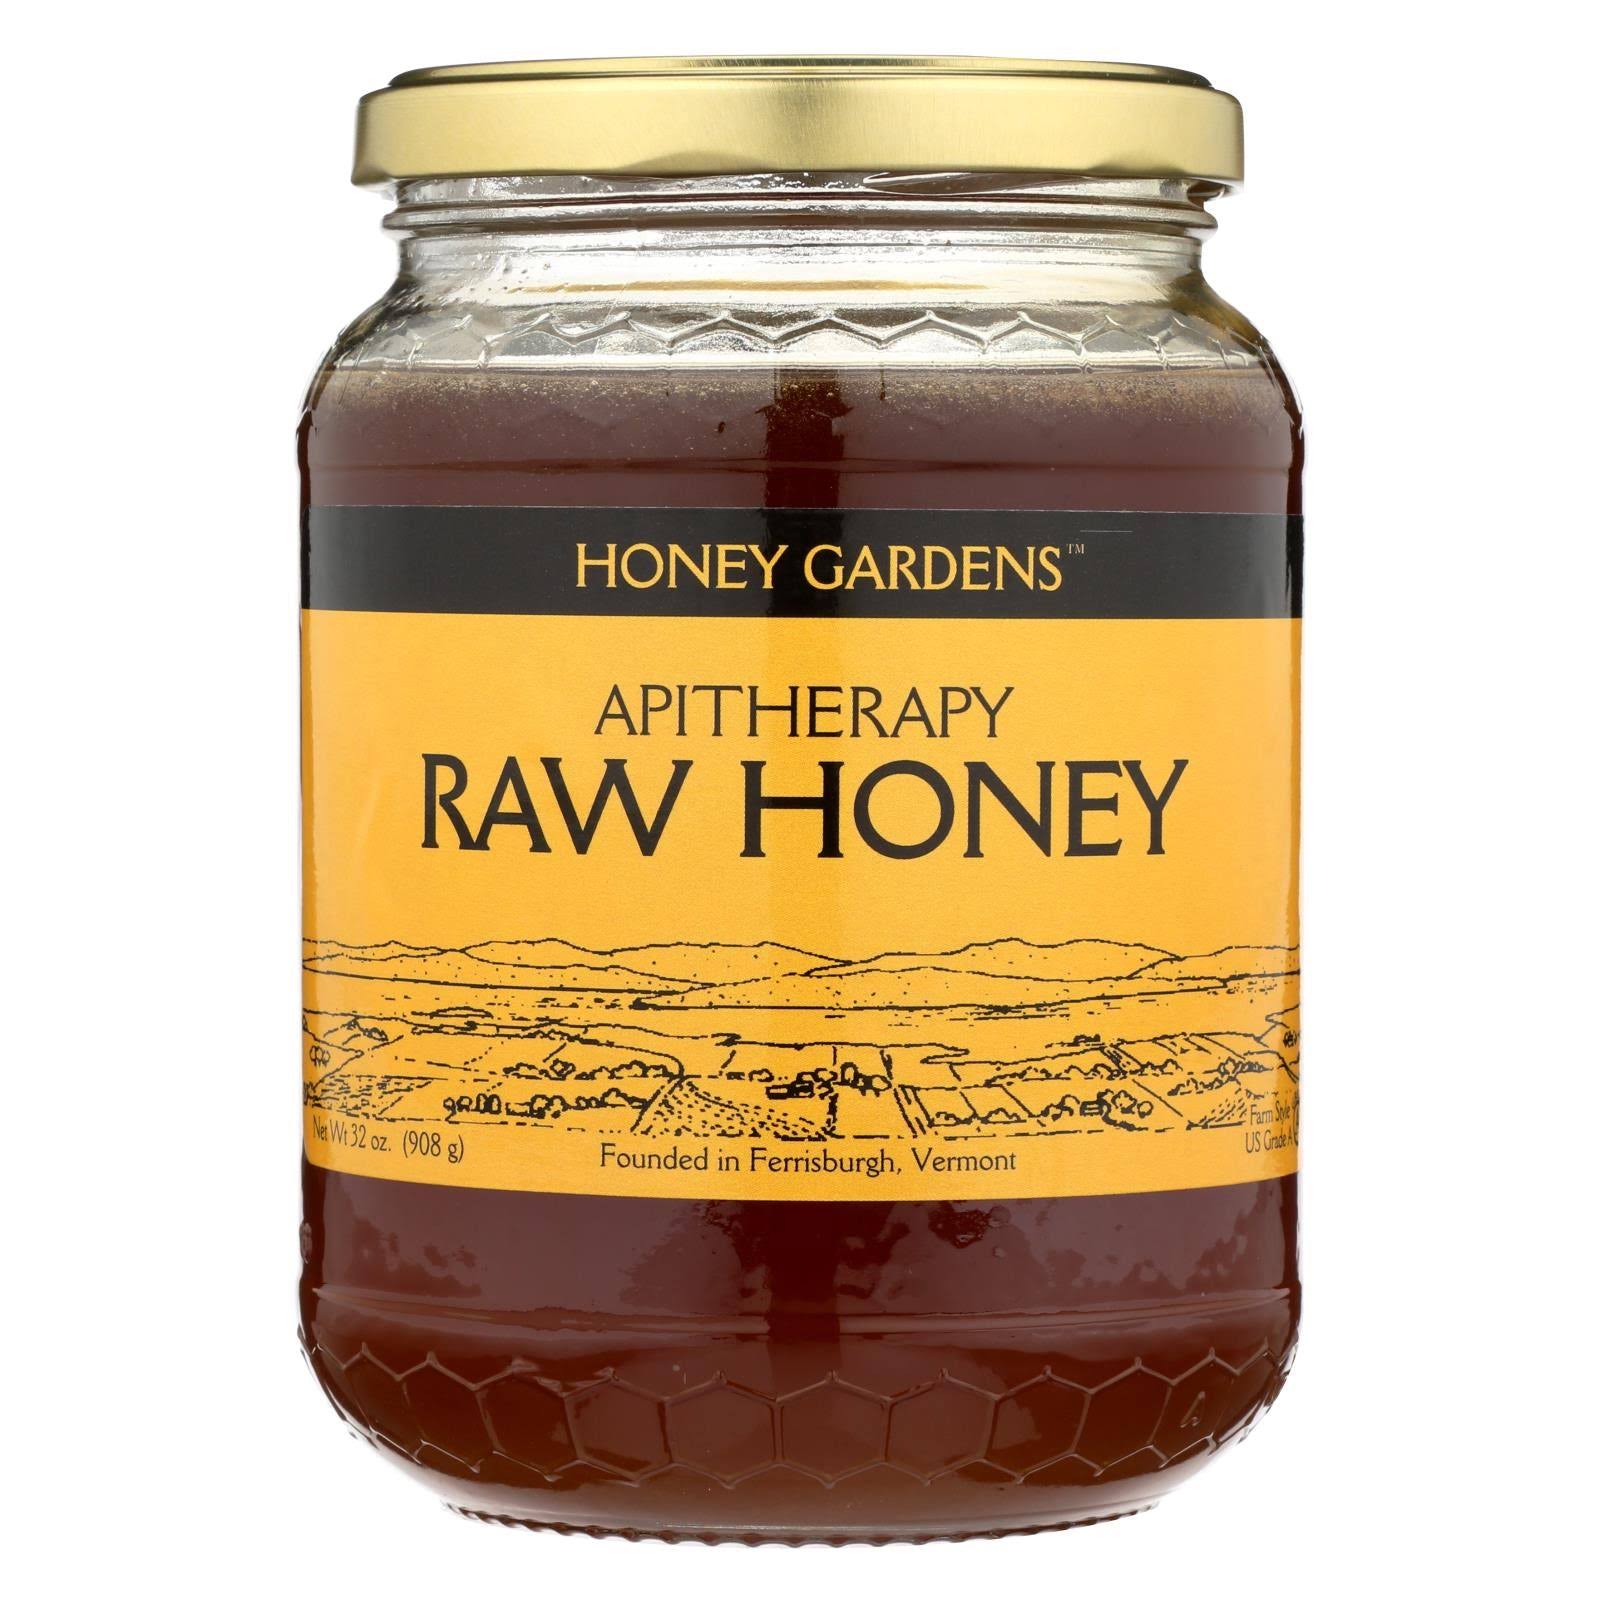 Honey Gardens Apitherapy Raw Honey - 2 lbs